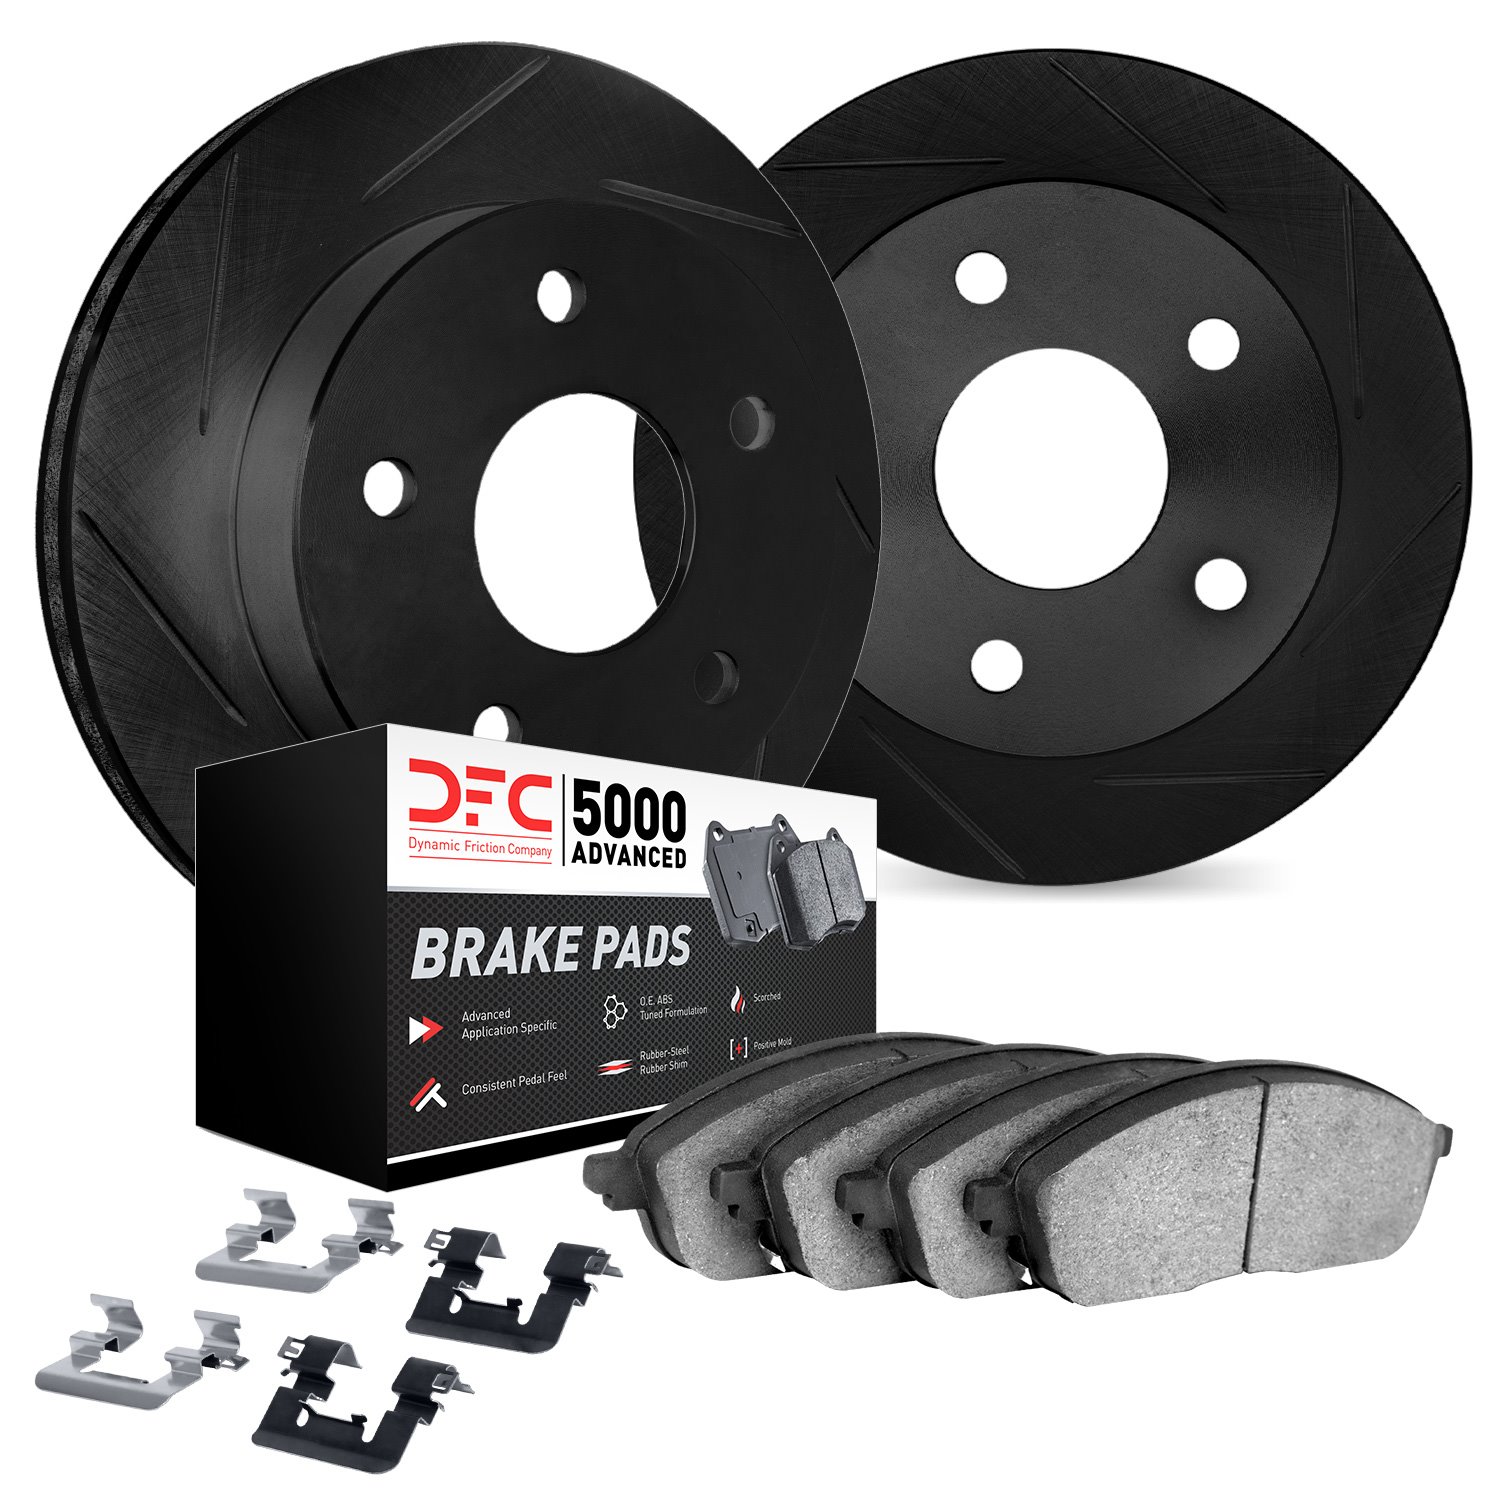 3512-54225 Slotted Brake Rotors w/5000 Advanced Brake Pads Kit & Hardware [Black], 2013-2019 Ford/Lincoln/Mercury/Mazda, Positio